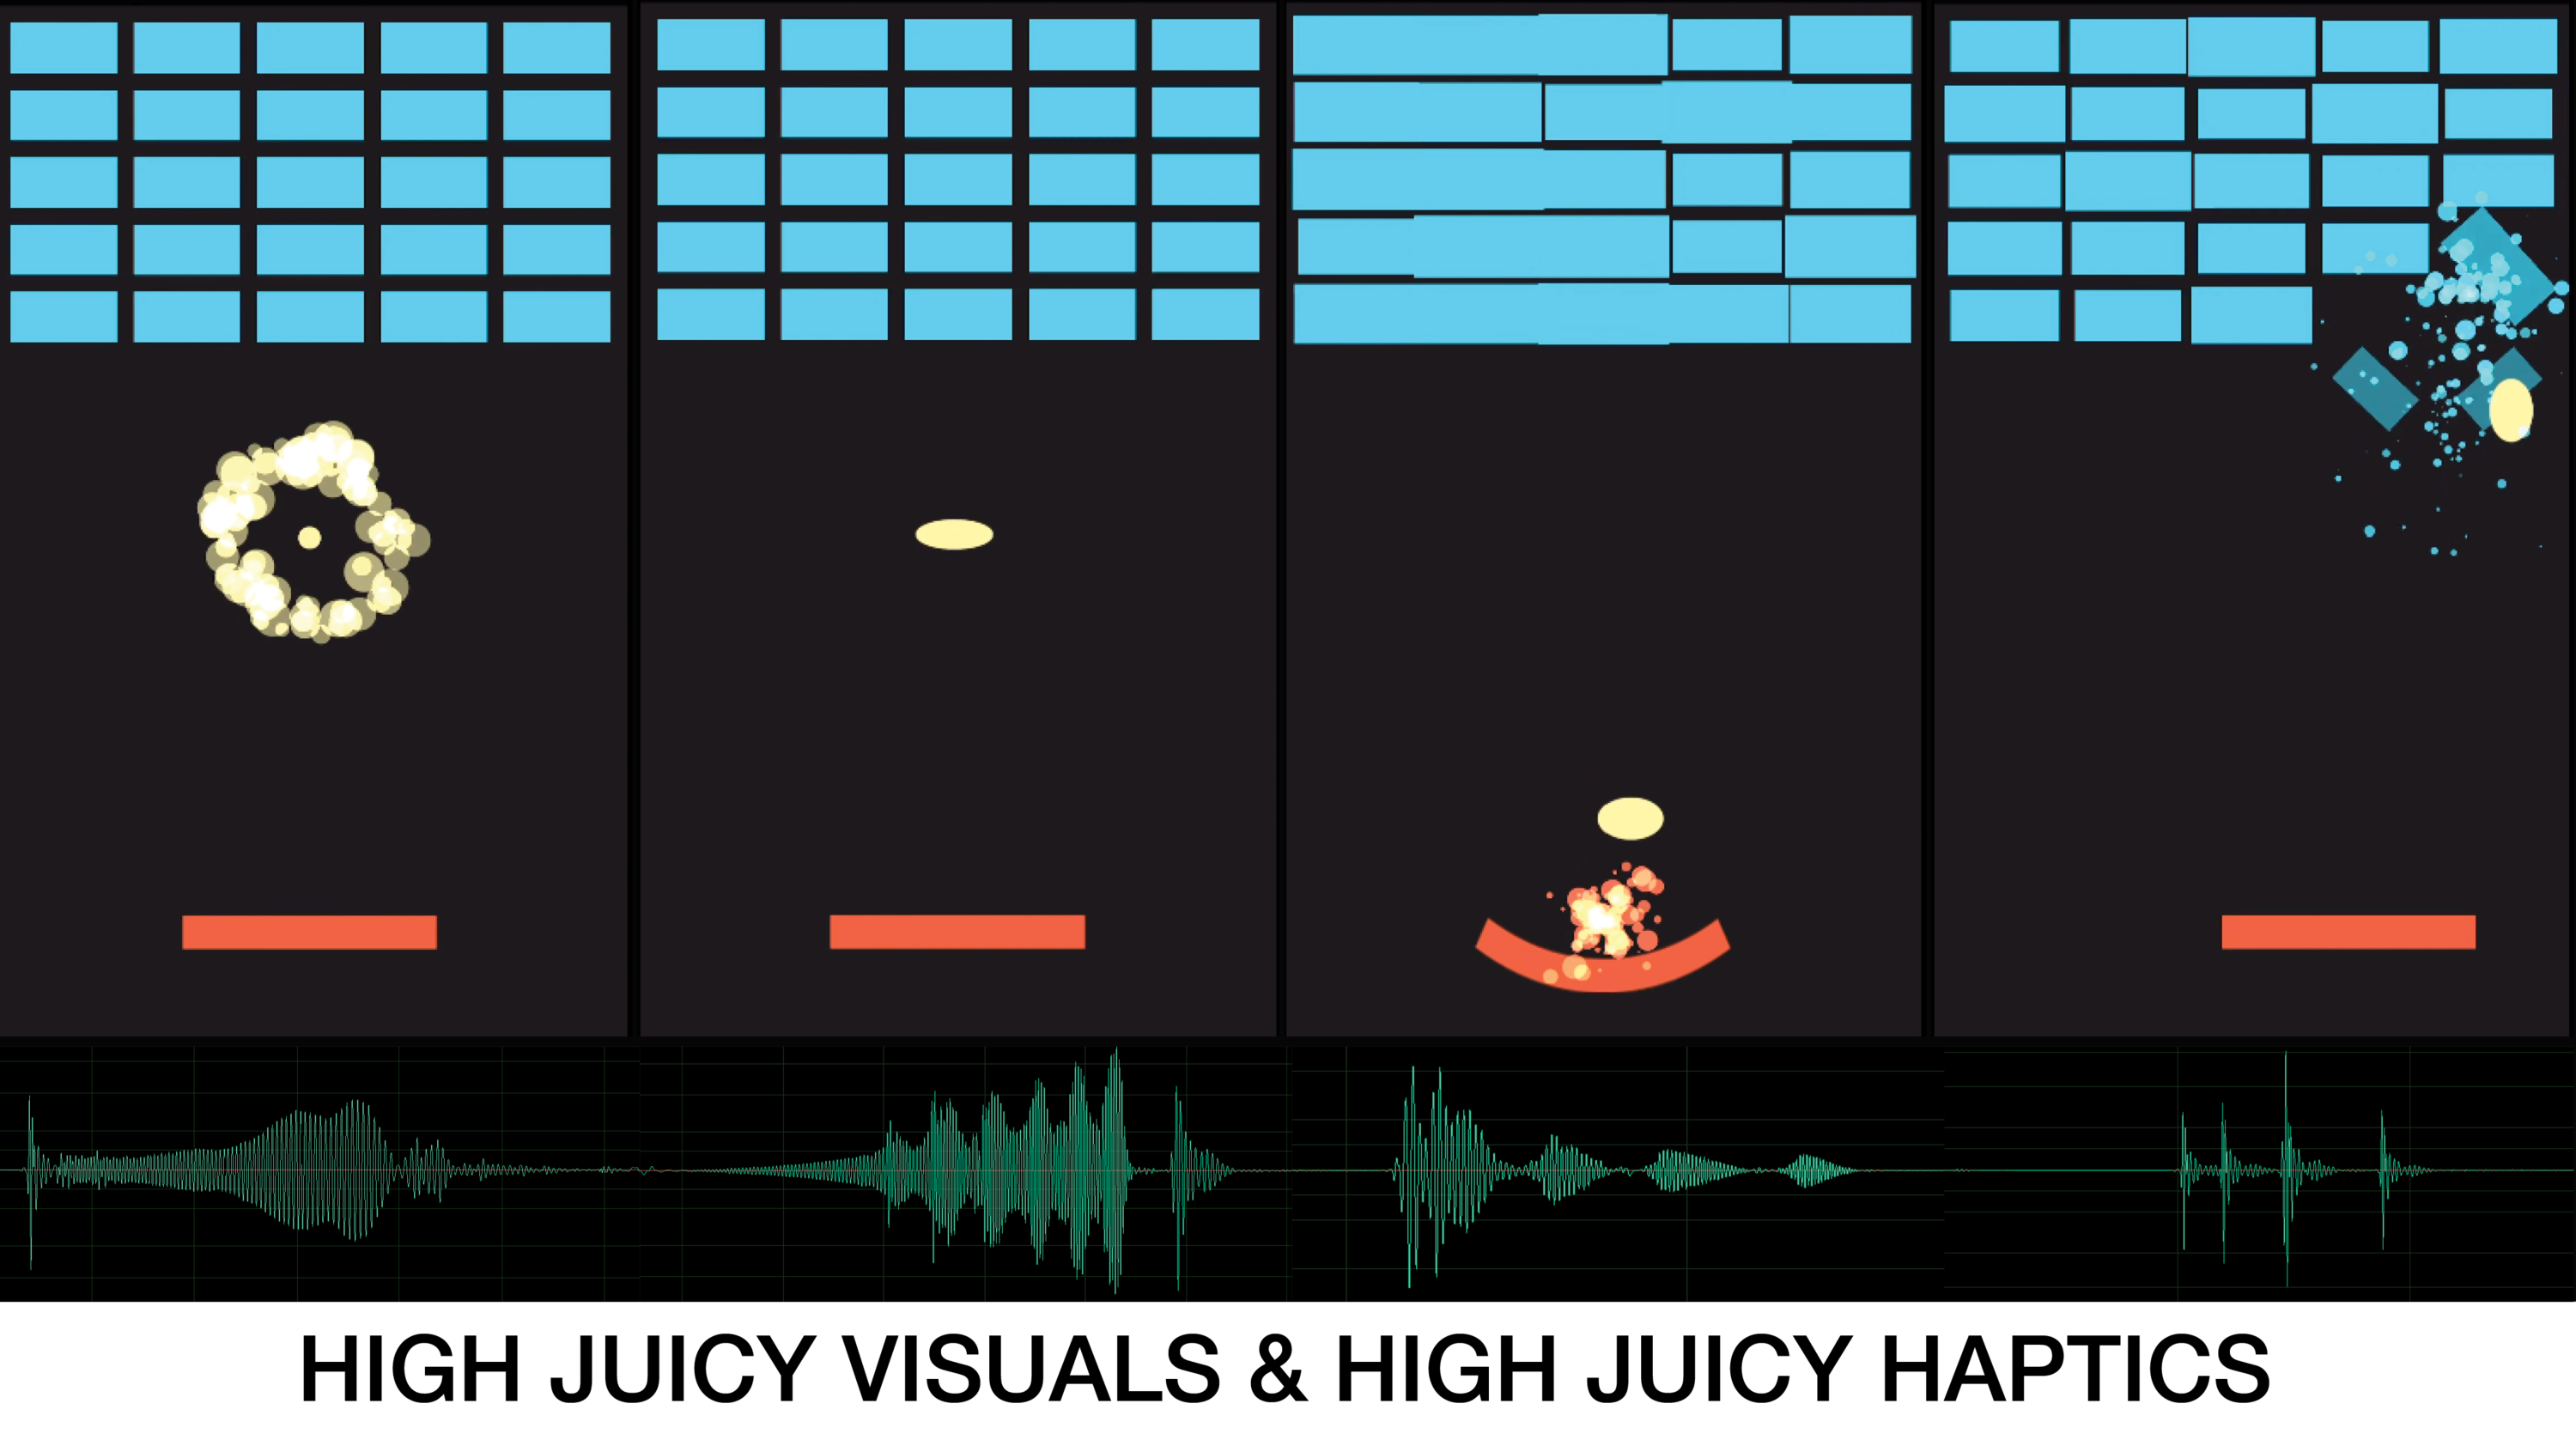 Juicy haptics screenshot of exaggerated screen and haptic effects